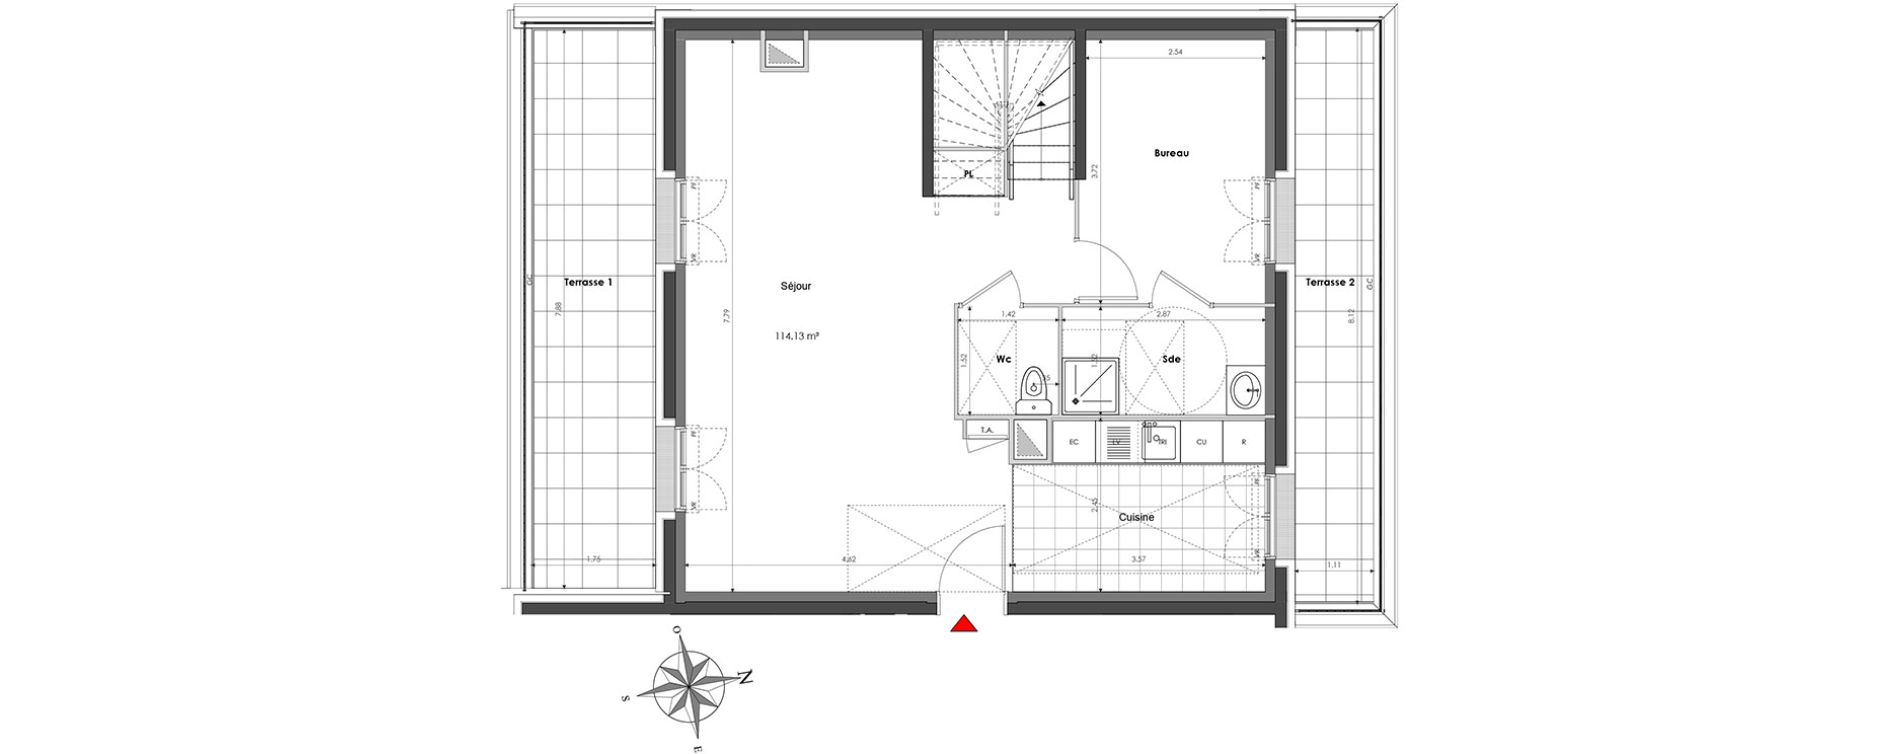 Duplex T6 de 114,13 m2 &agrave; Clamart Panorama